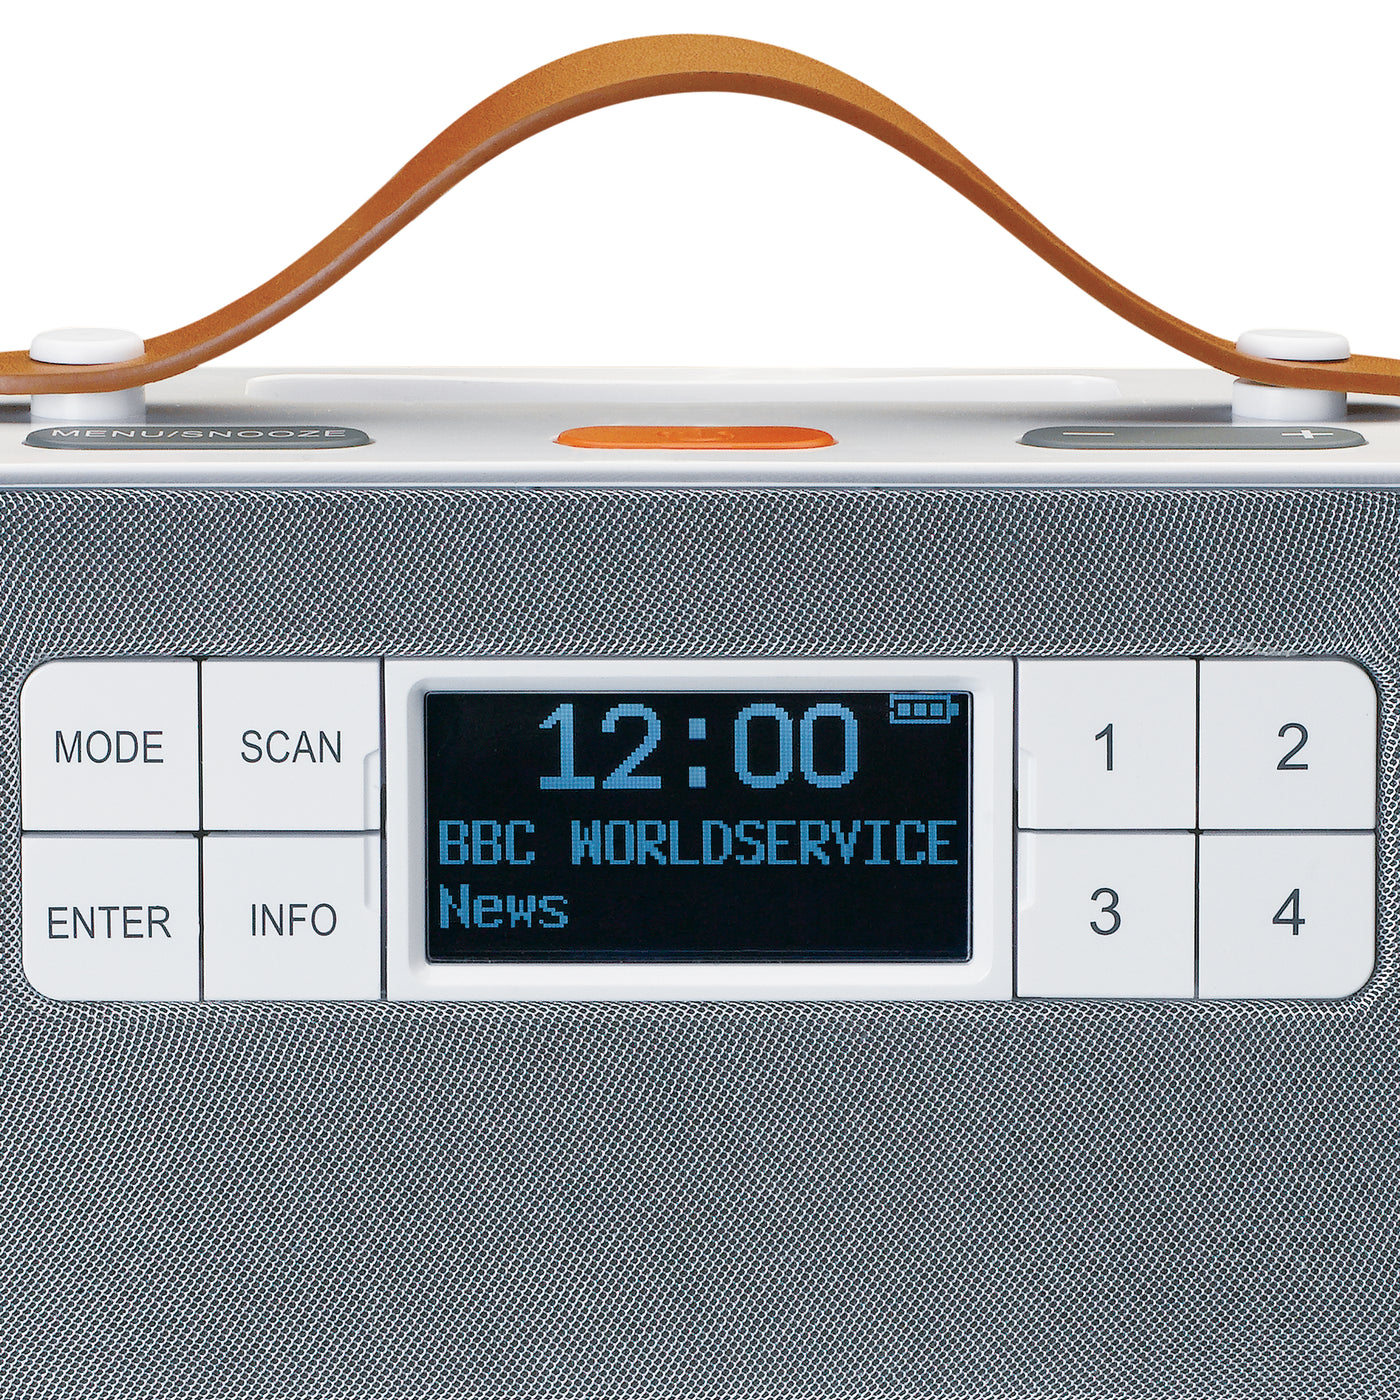 LENCO PDR-065WH - Draagbare senioren FM/DAB+ radio met grote knoppen en "Easy Mode" functie, wit